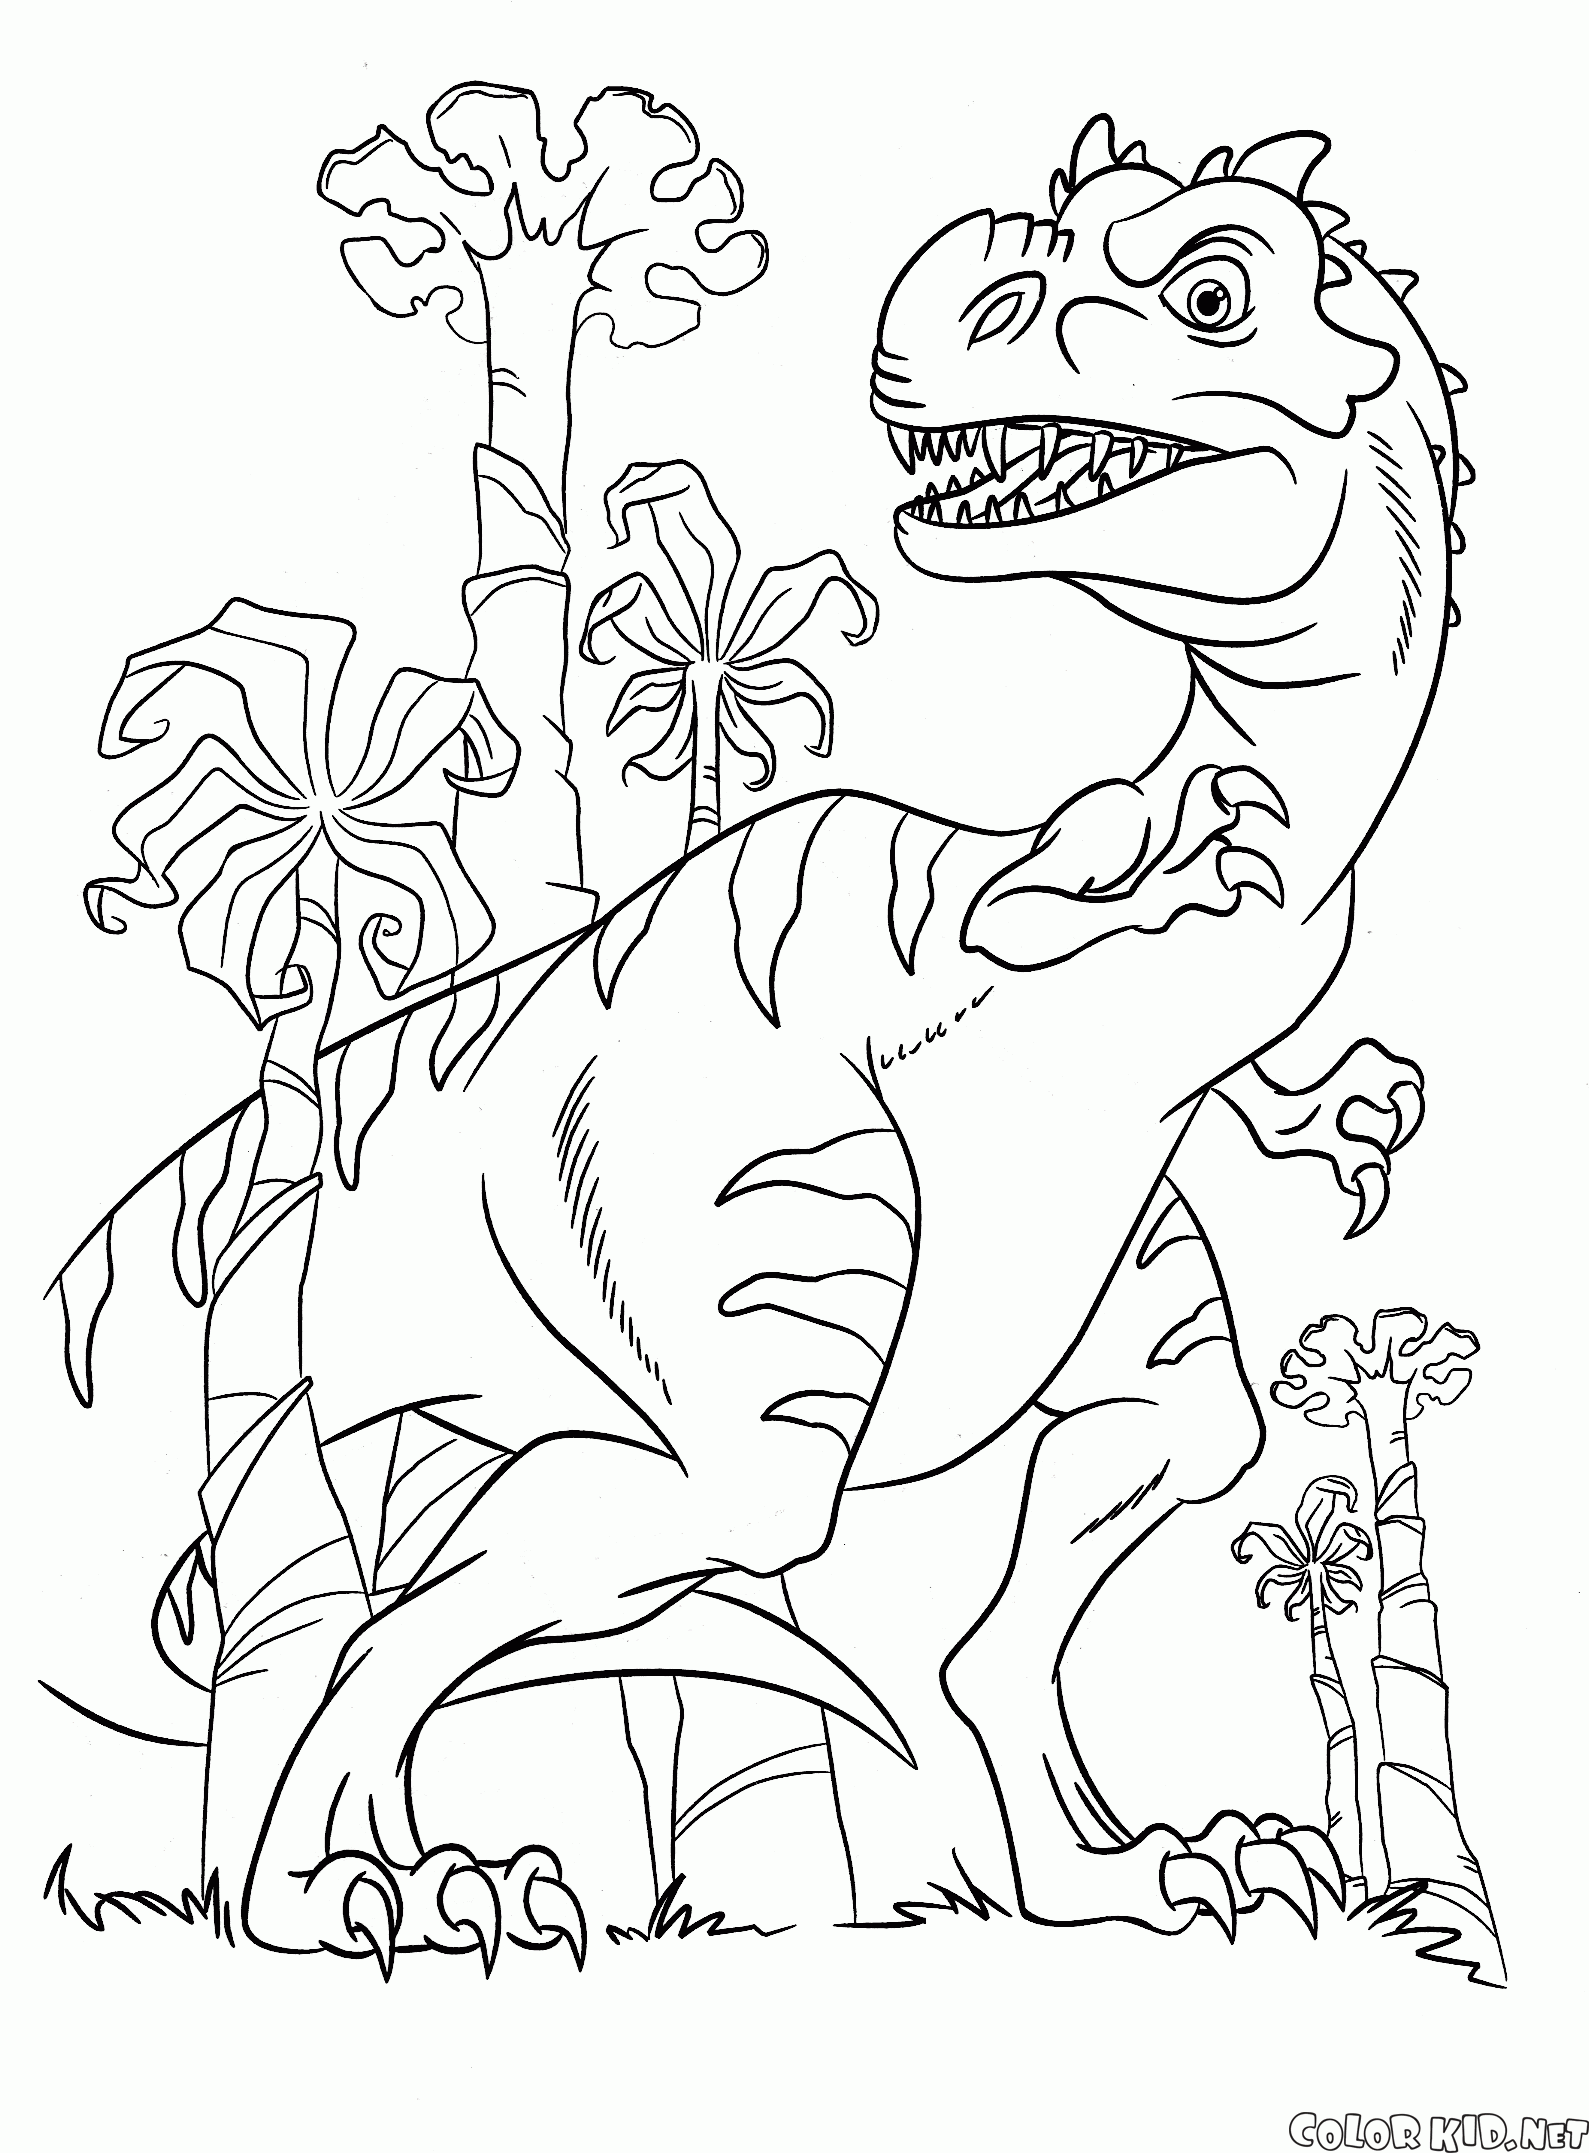 Dinozor anne